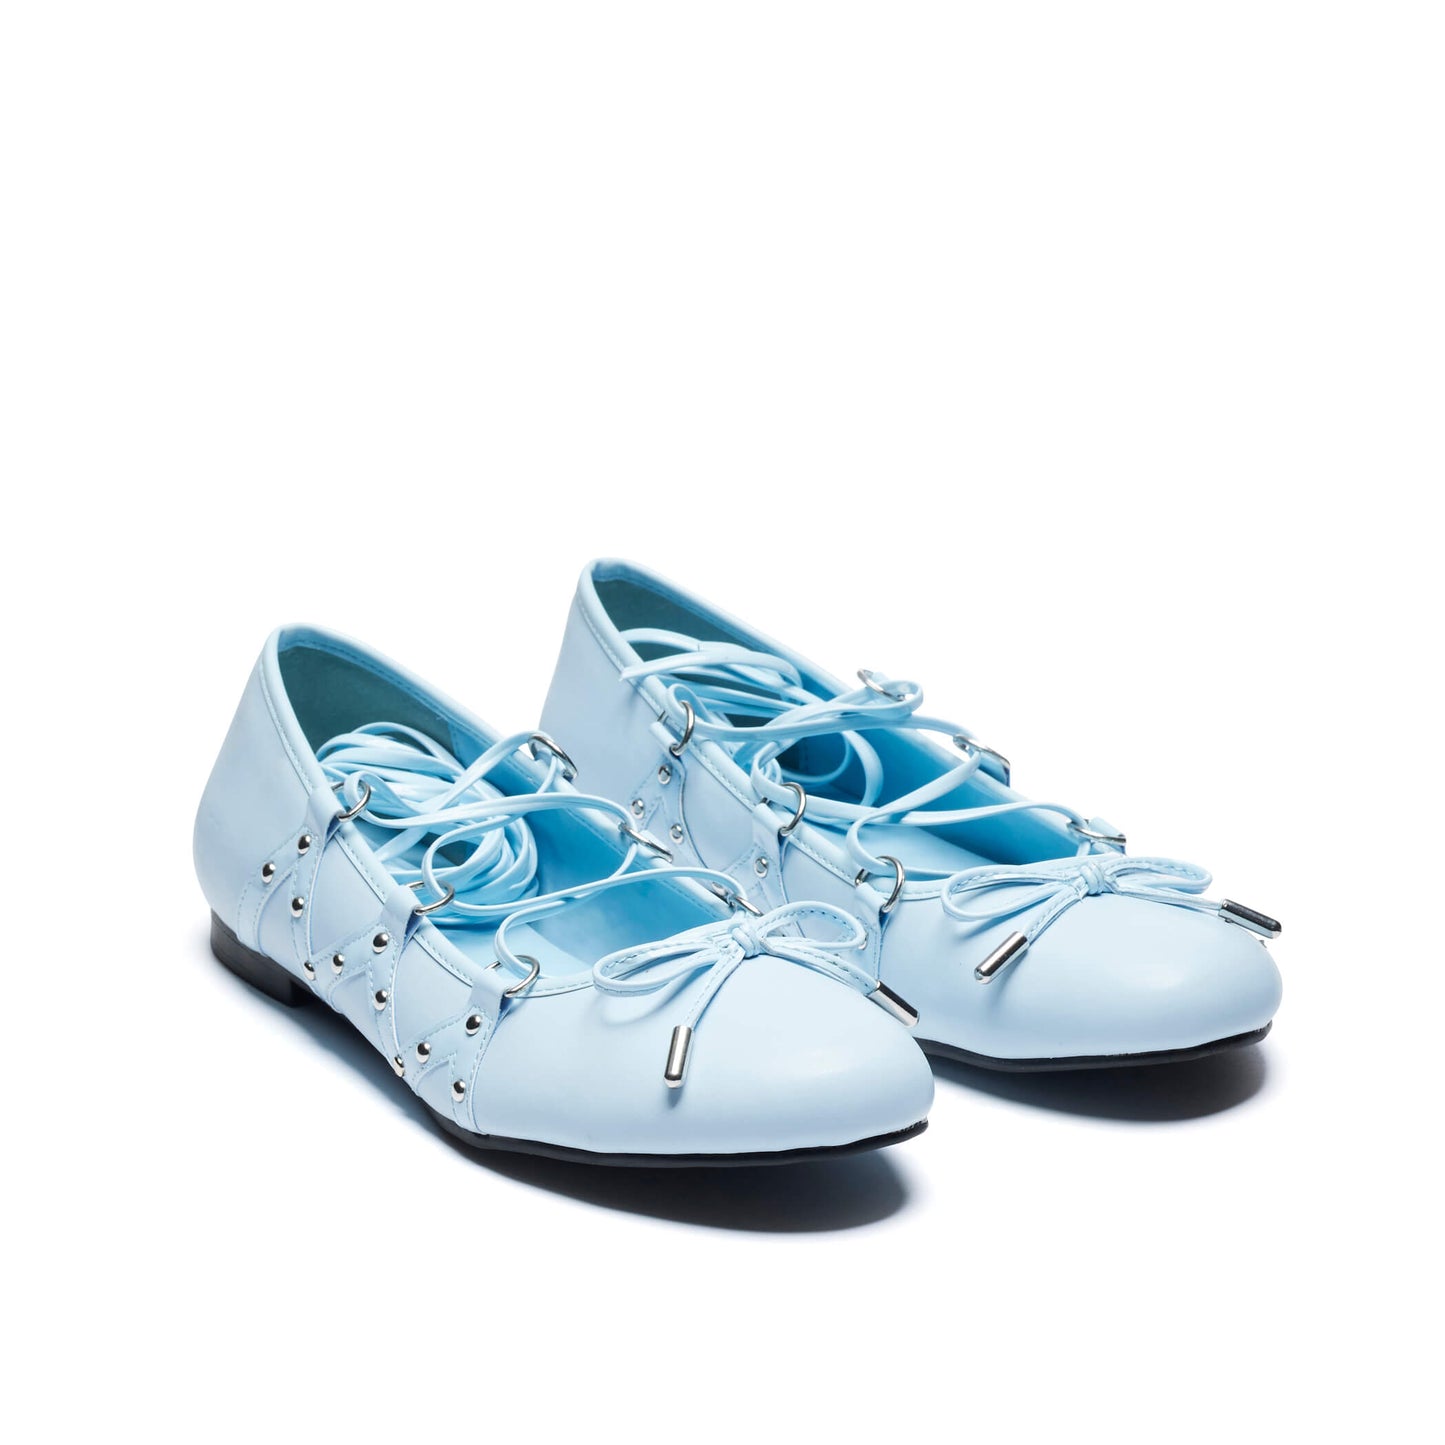 Violetta Lace Up Flat Ballet Shoes - Blue - Koi Footwear - Three-Quarters View